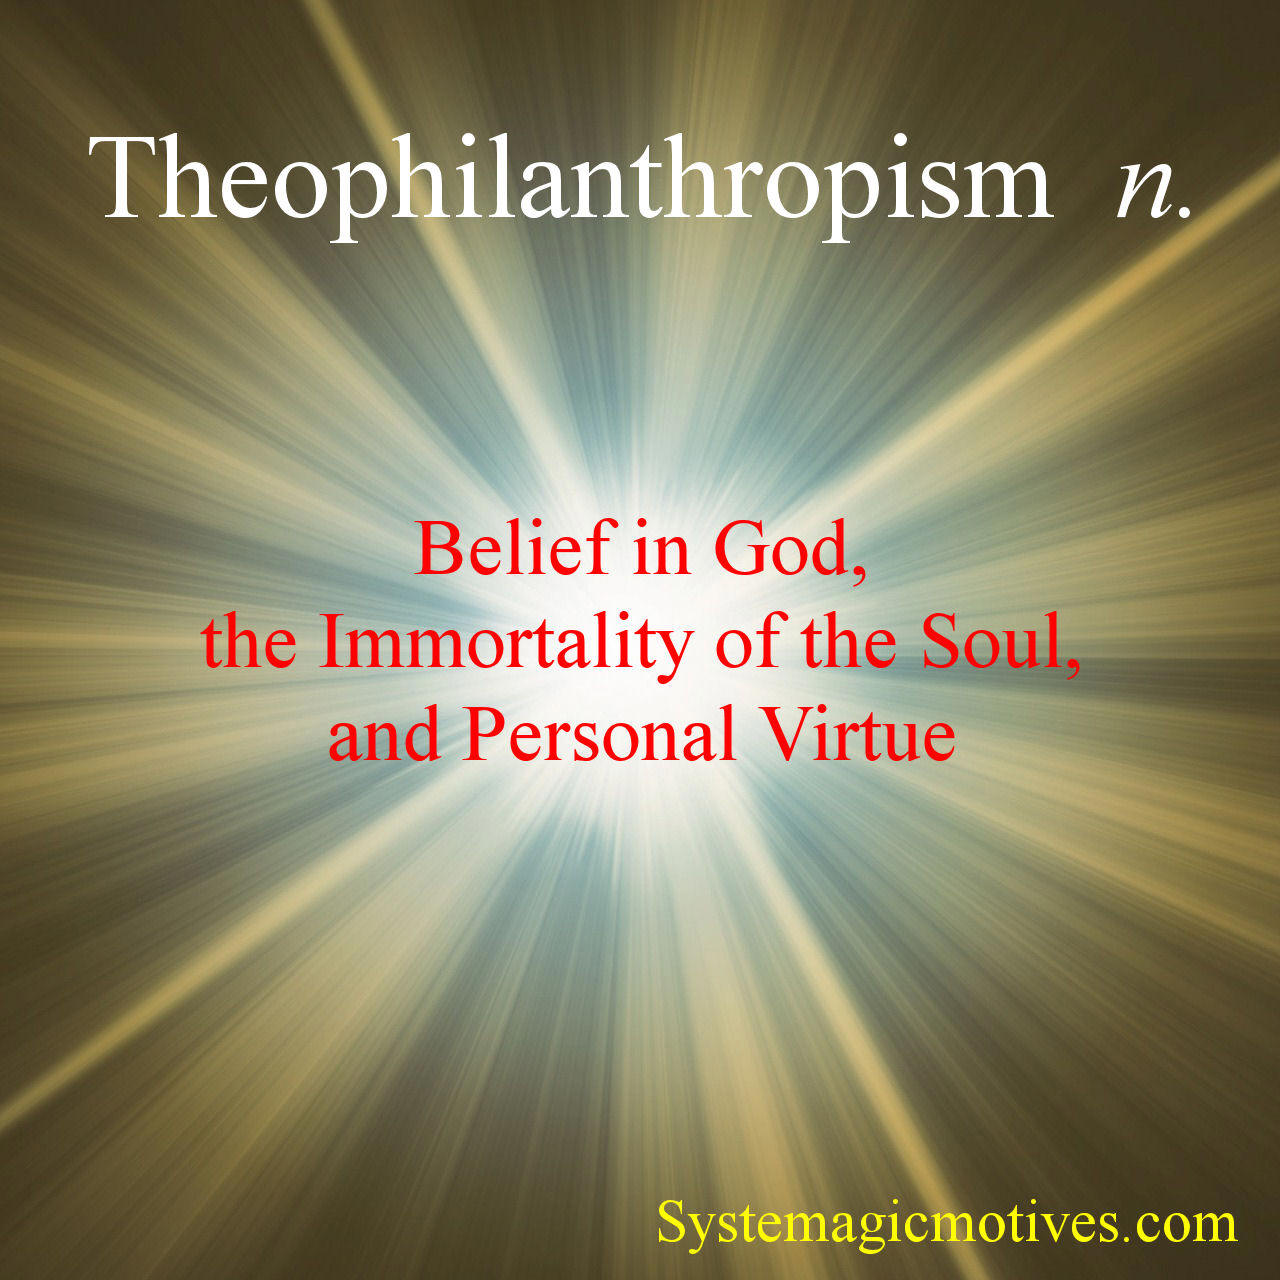 Graphic Definition of Theophilanthropism